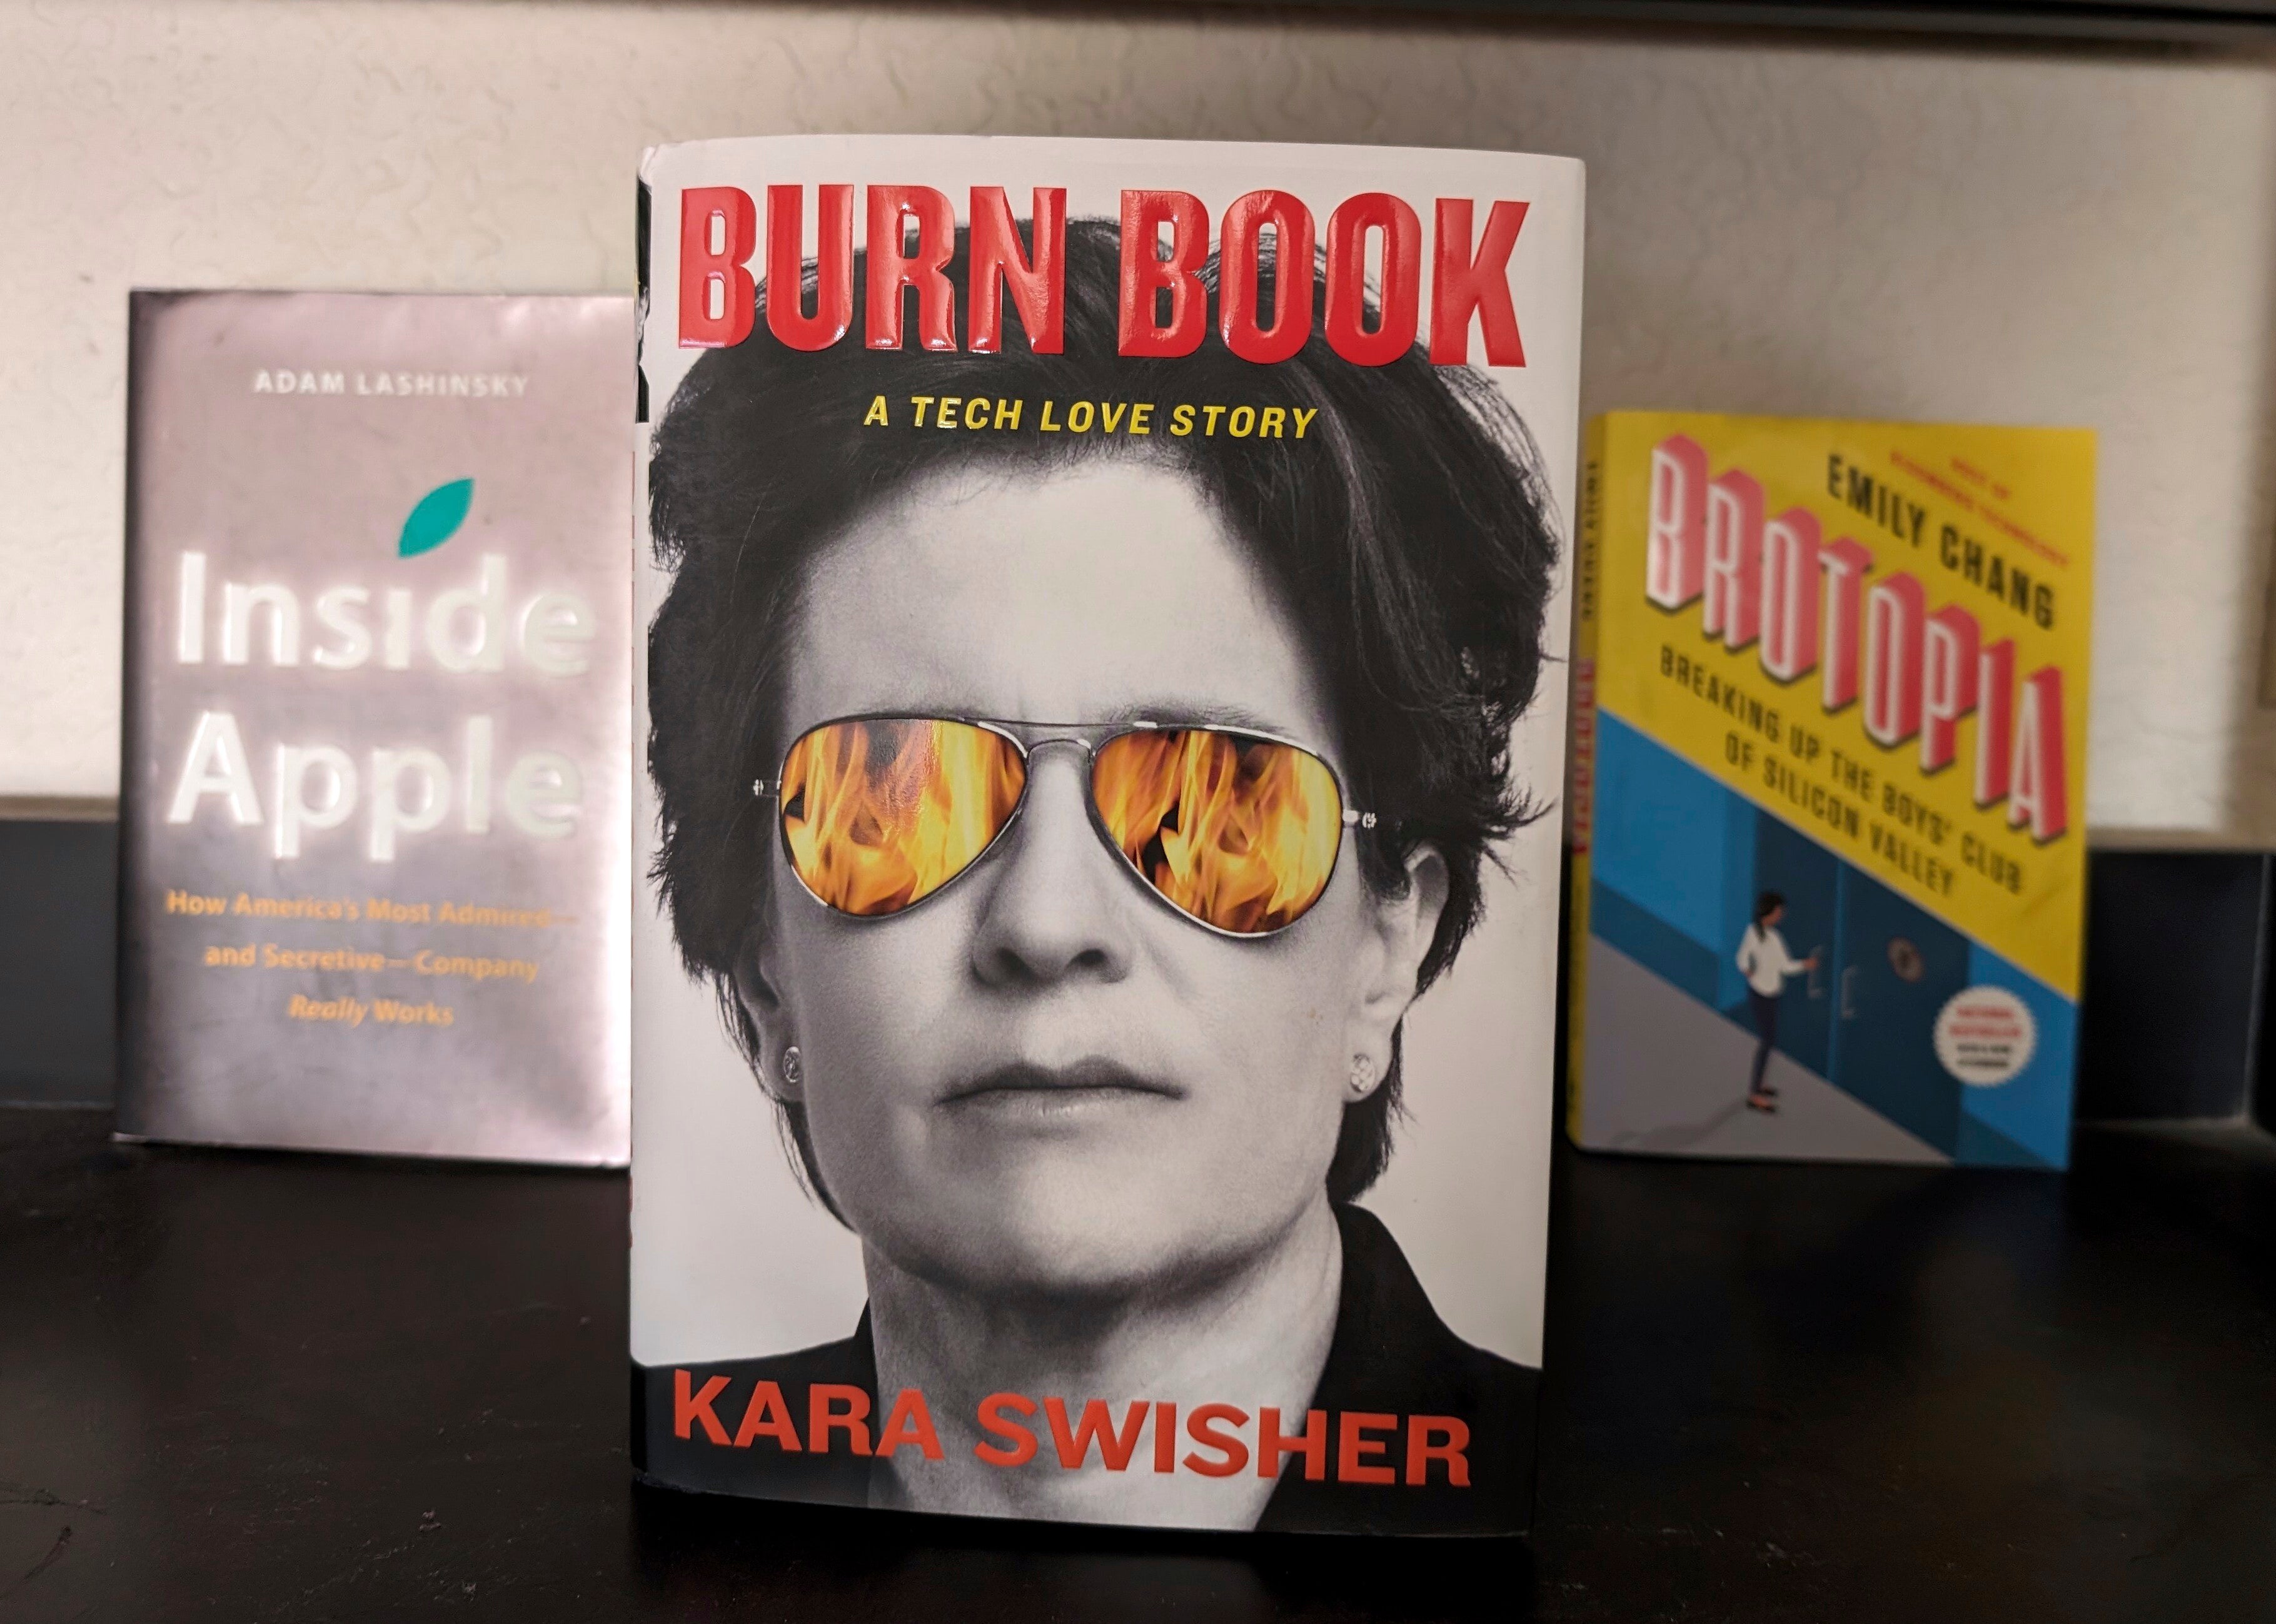 Burn Book-Tech Reality Check